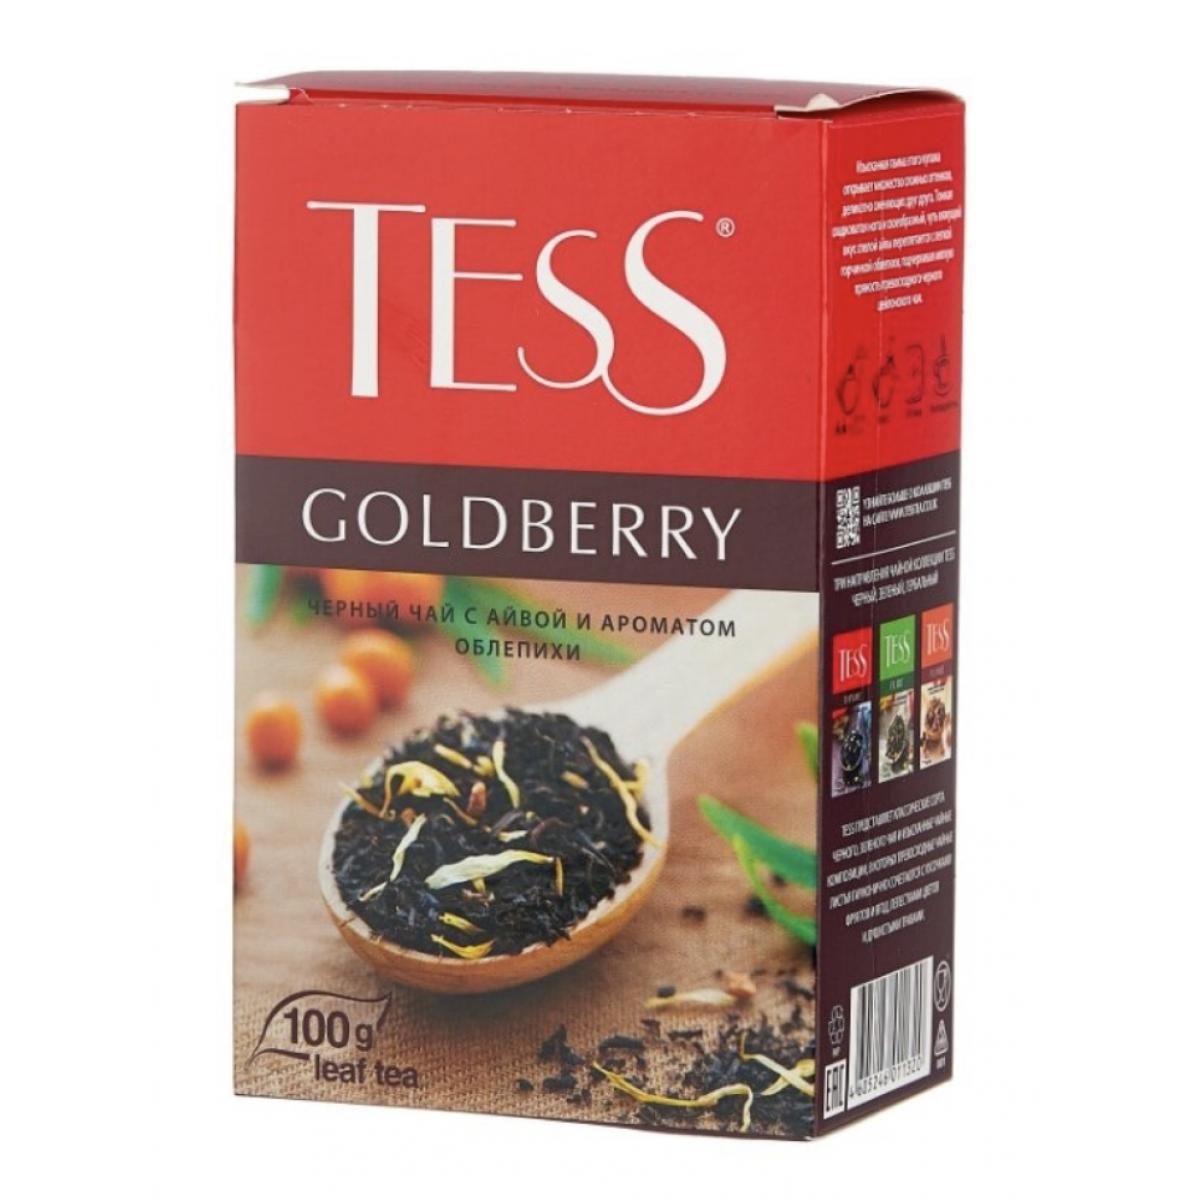 Чай tess шт. Чай черный Tess Goldberry 100г. Чай Тесс 25 пакетиков Голдберри. Чай Tess (Тесс) Thyme, черный. Тесс Голдберри 100г.чай лист.черн.с доб..